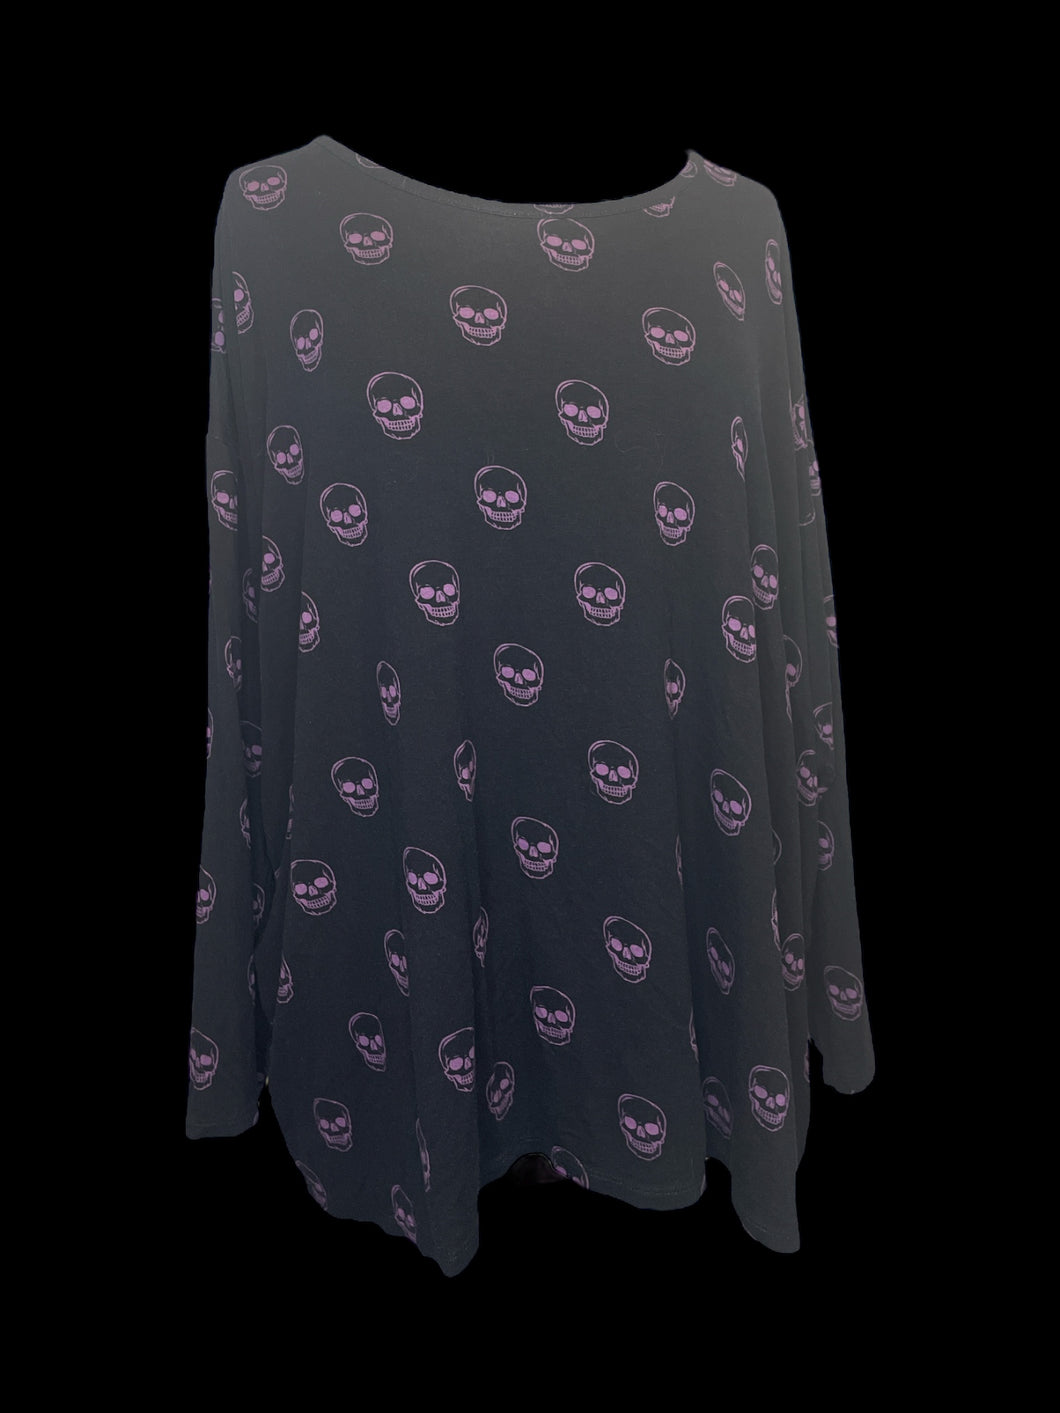 5X Black & purple skull pattern 3/4 sleeve hi-lo top